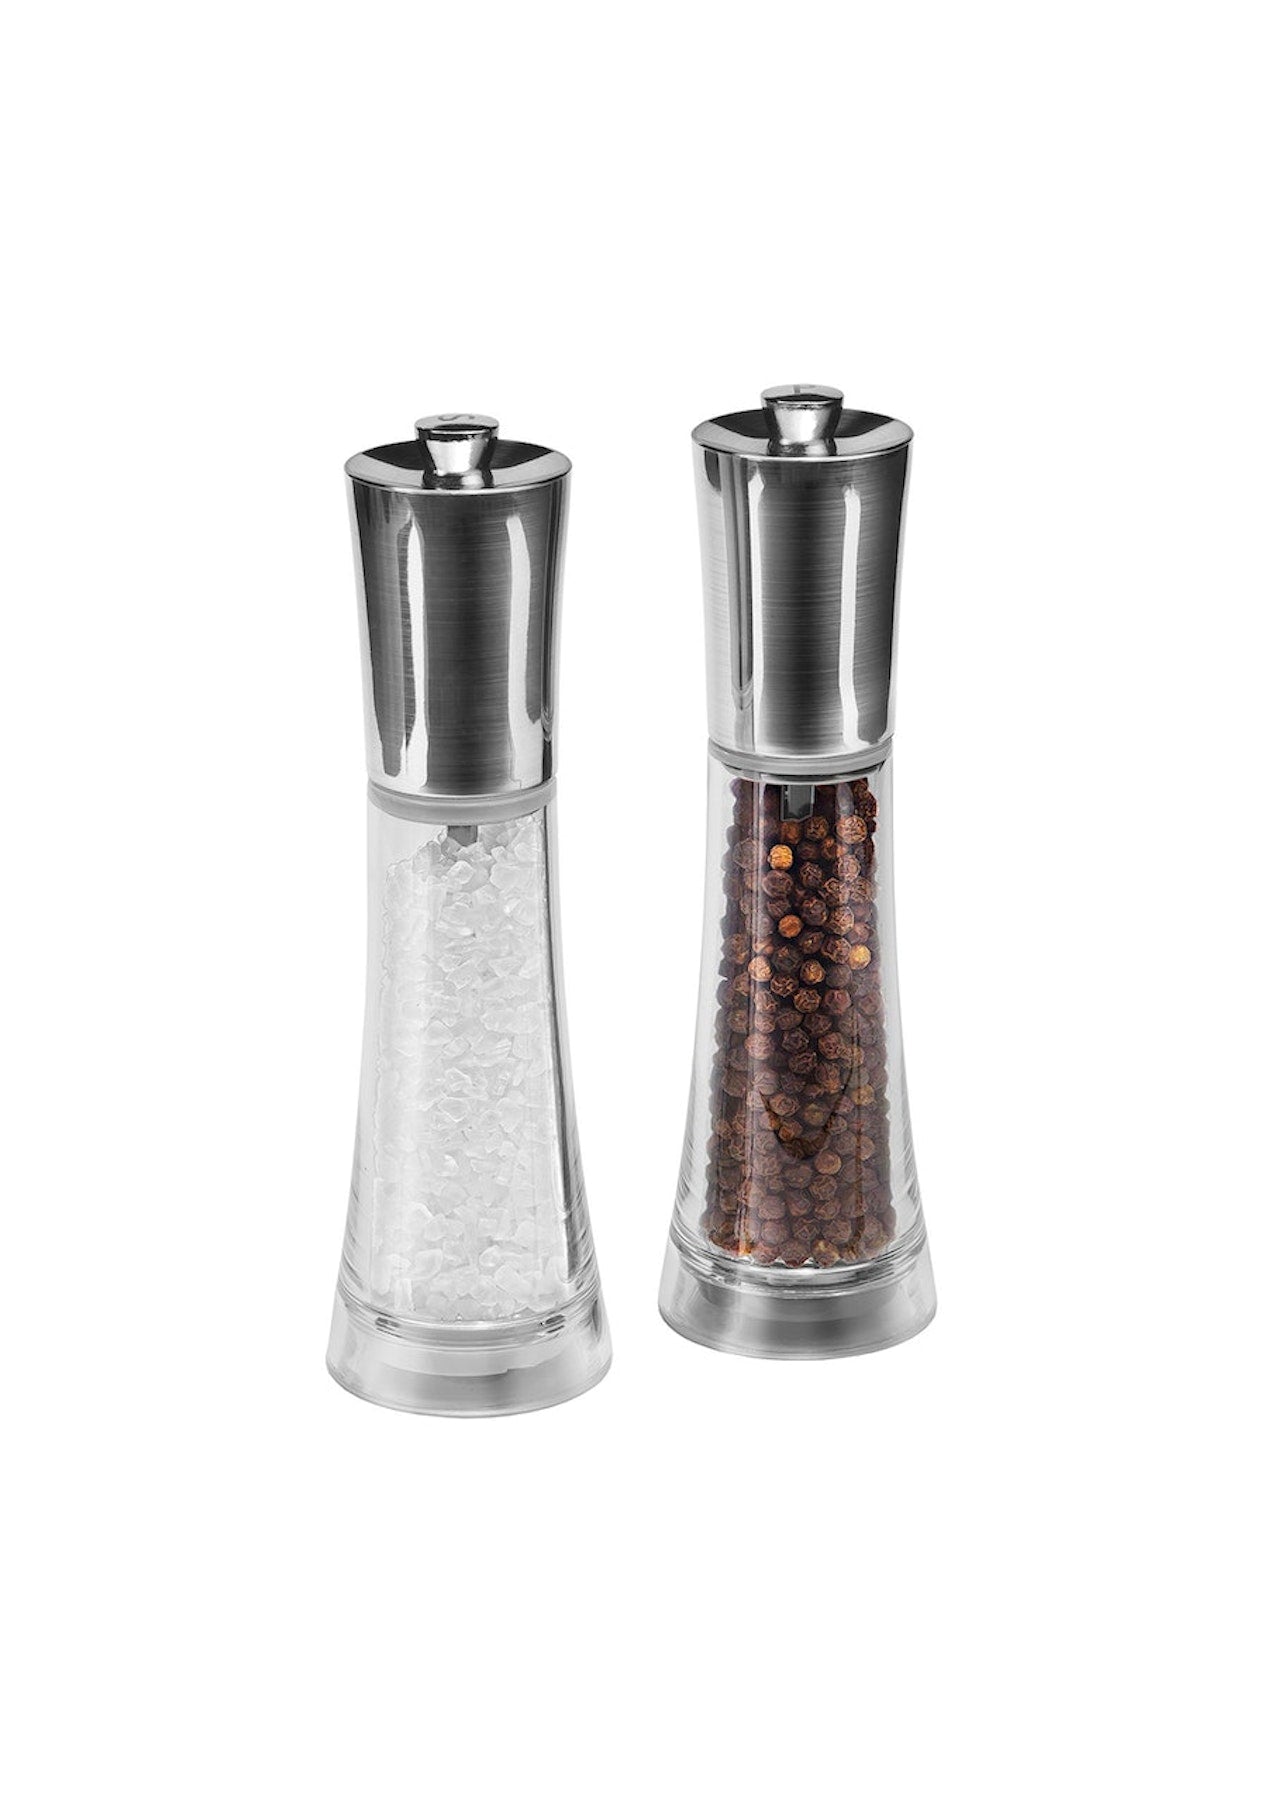 Style-Salt and Pepper set